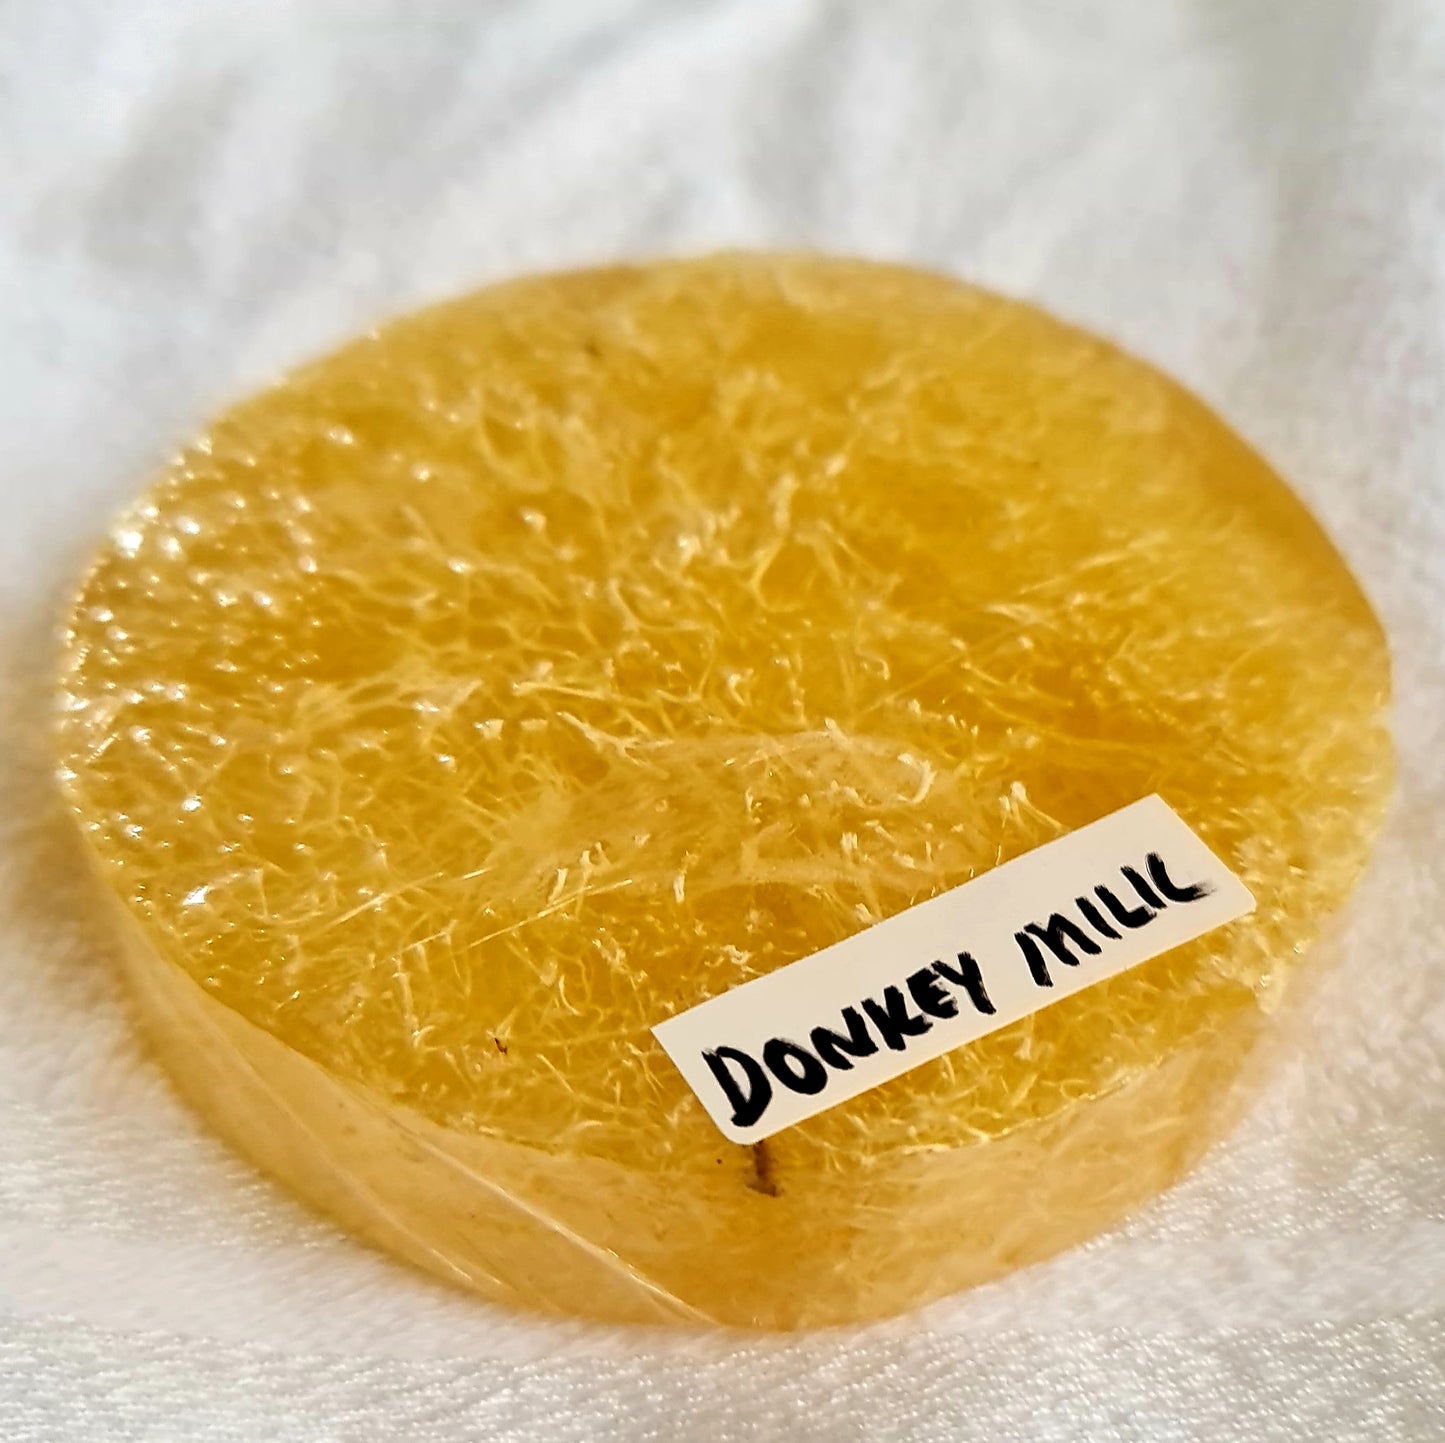 Pumpkin Fiber Donkey Milk Soap